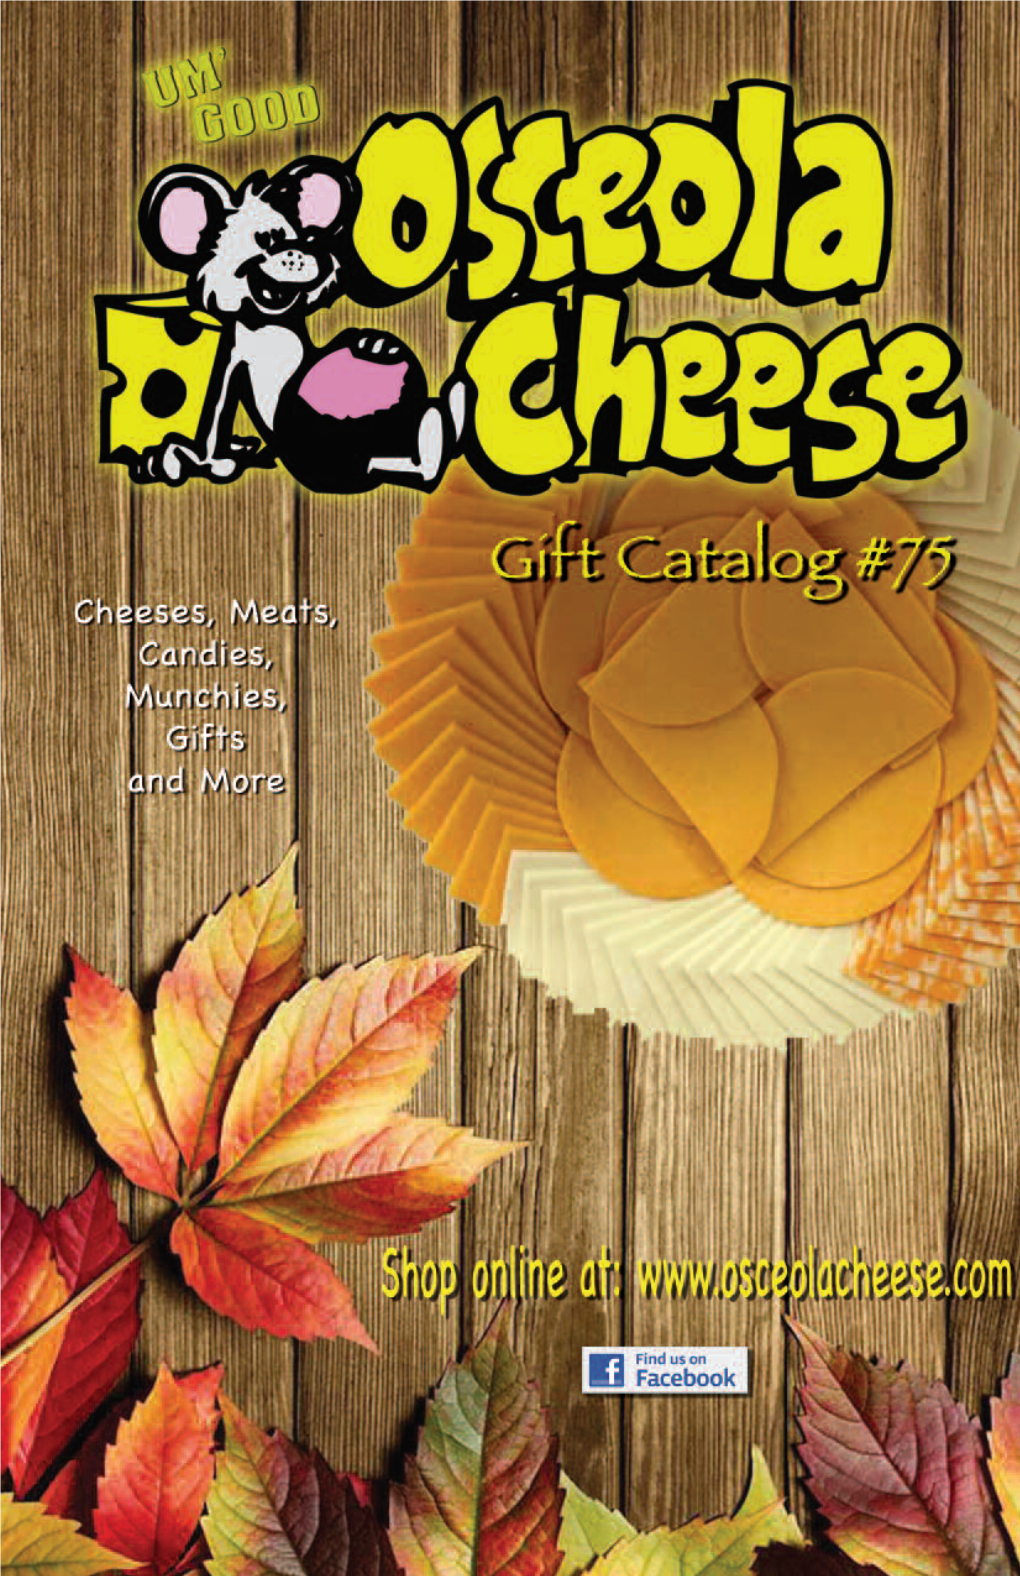 Osceola-Cheese-Catalog-And-Price